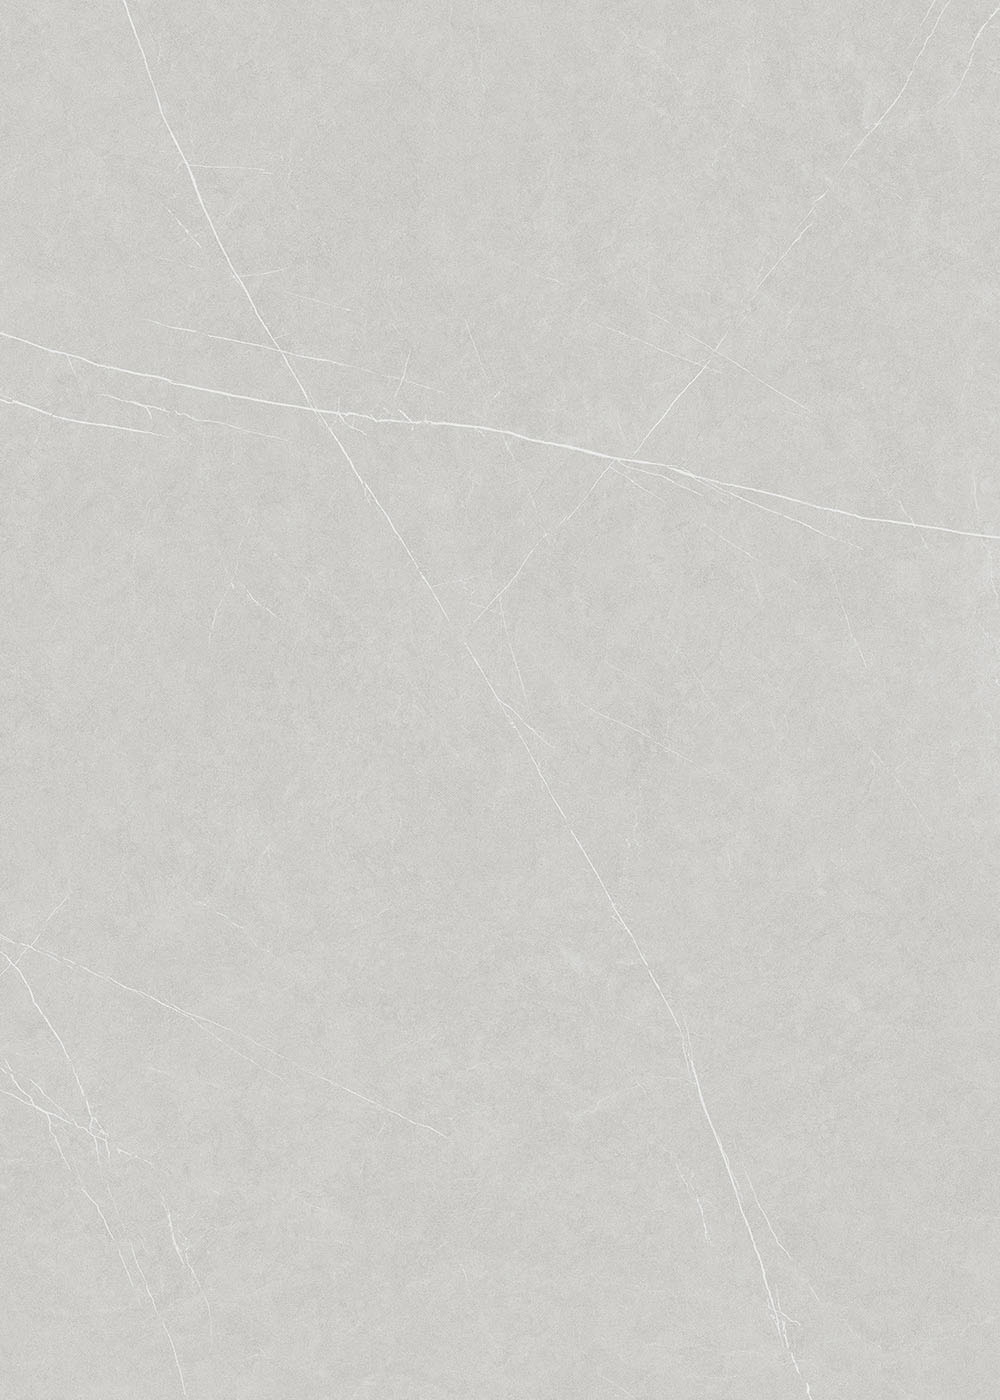 La Pietra Marble & Granite pz lithotech allure lightgrey 01